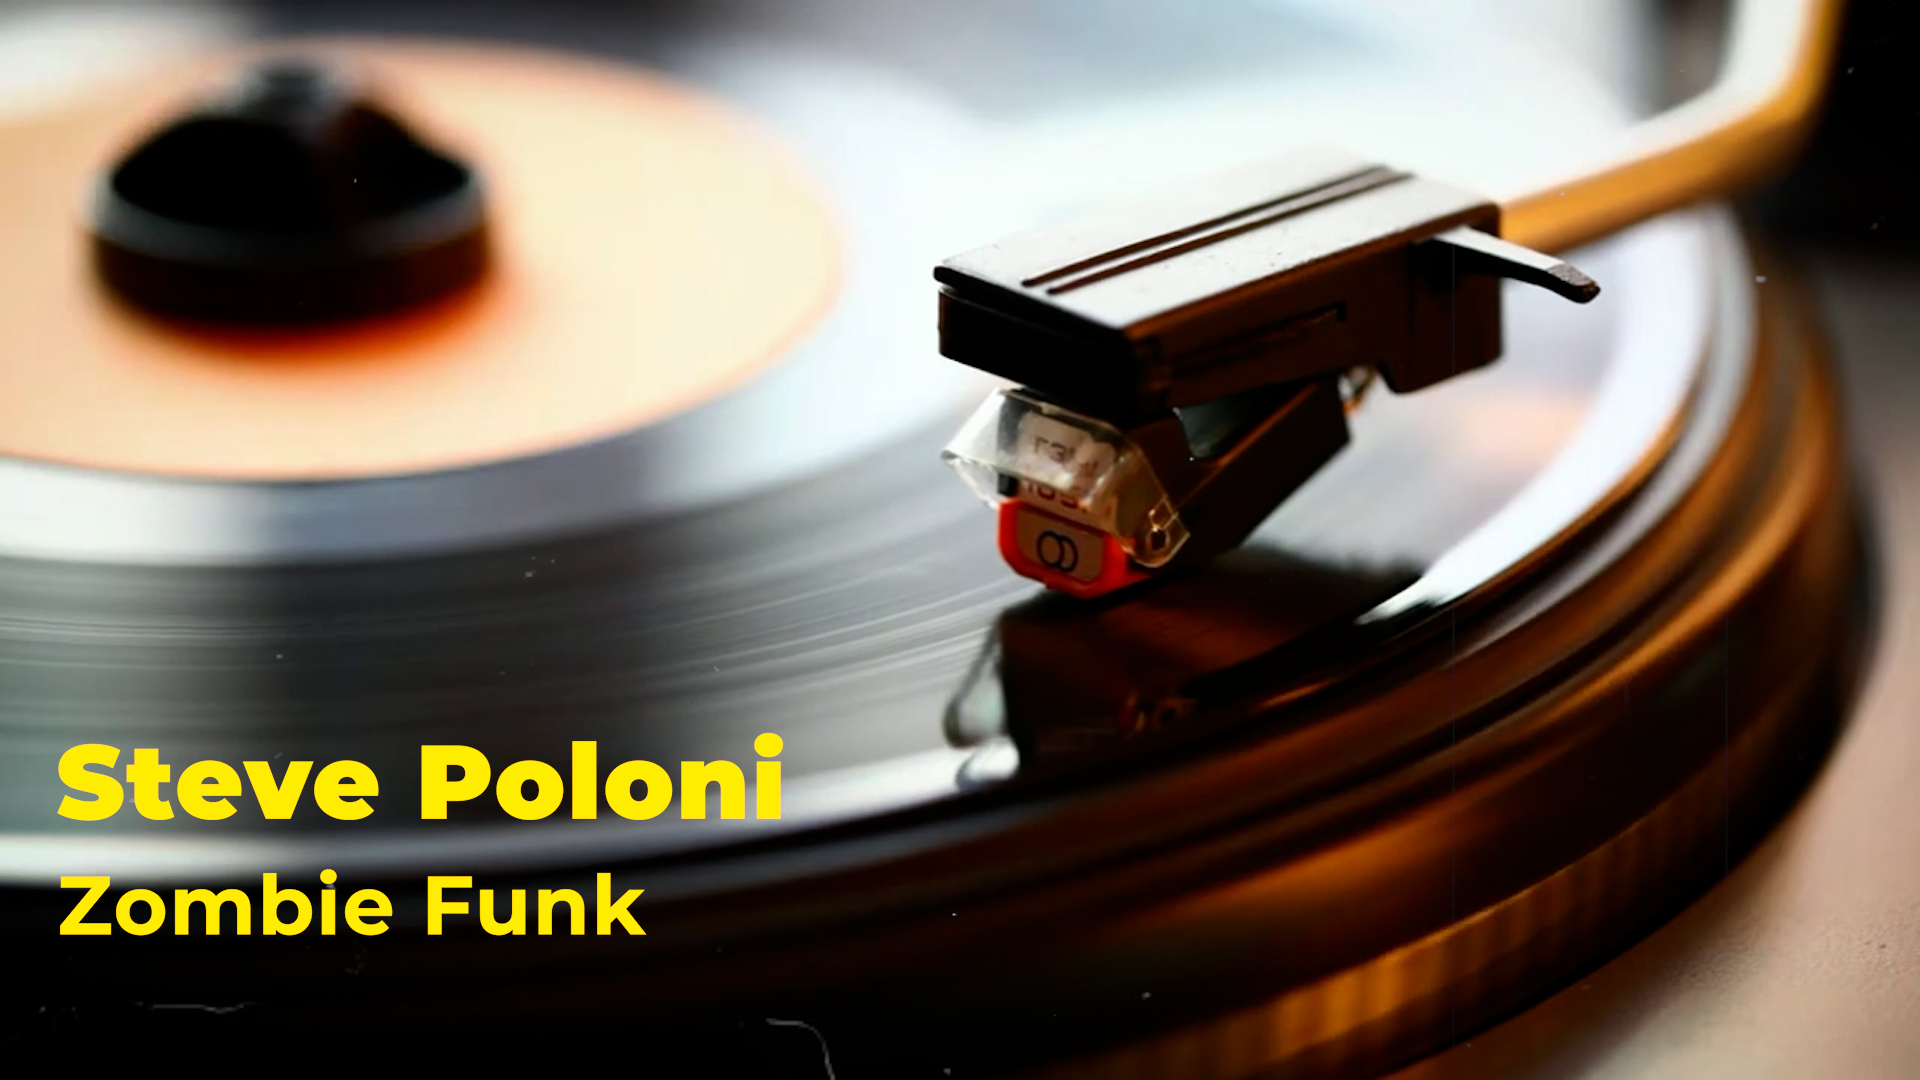 Steve Poloni - Zombie Funk (Funk)
Музыка без авторских прав
No Copyright Music